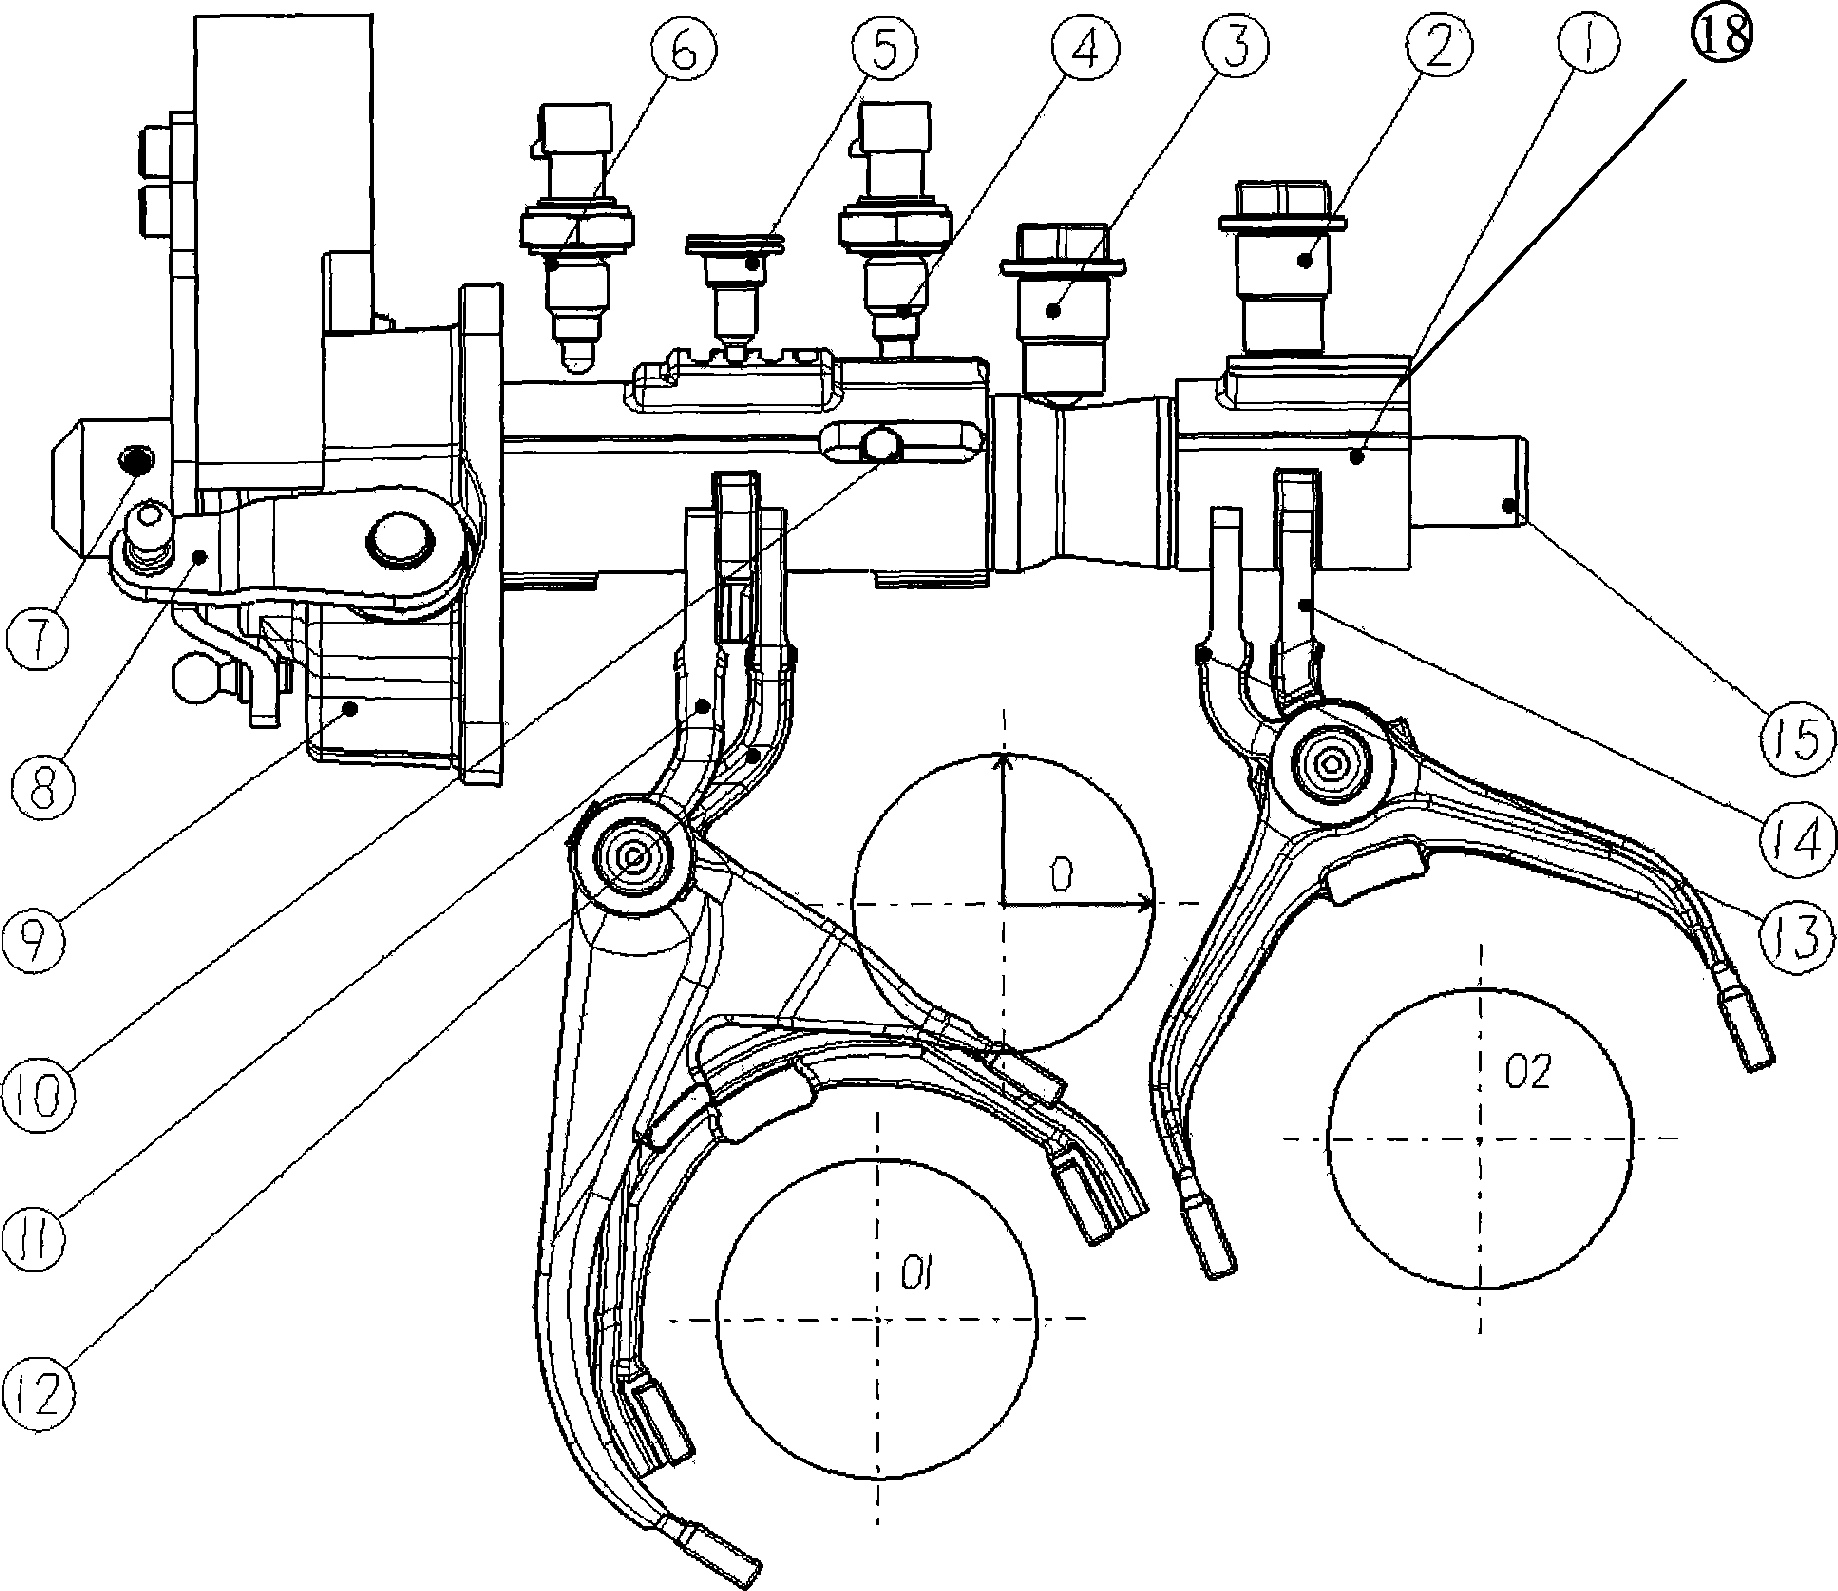 Gear shift mechanism of manual transmission